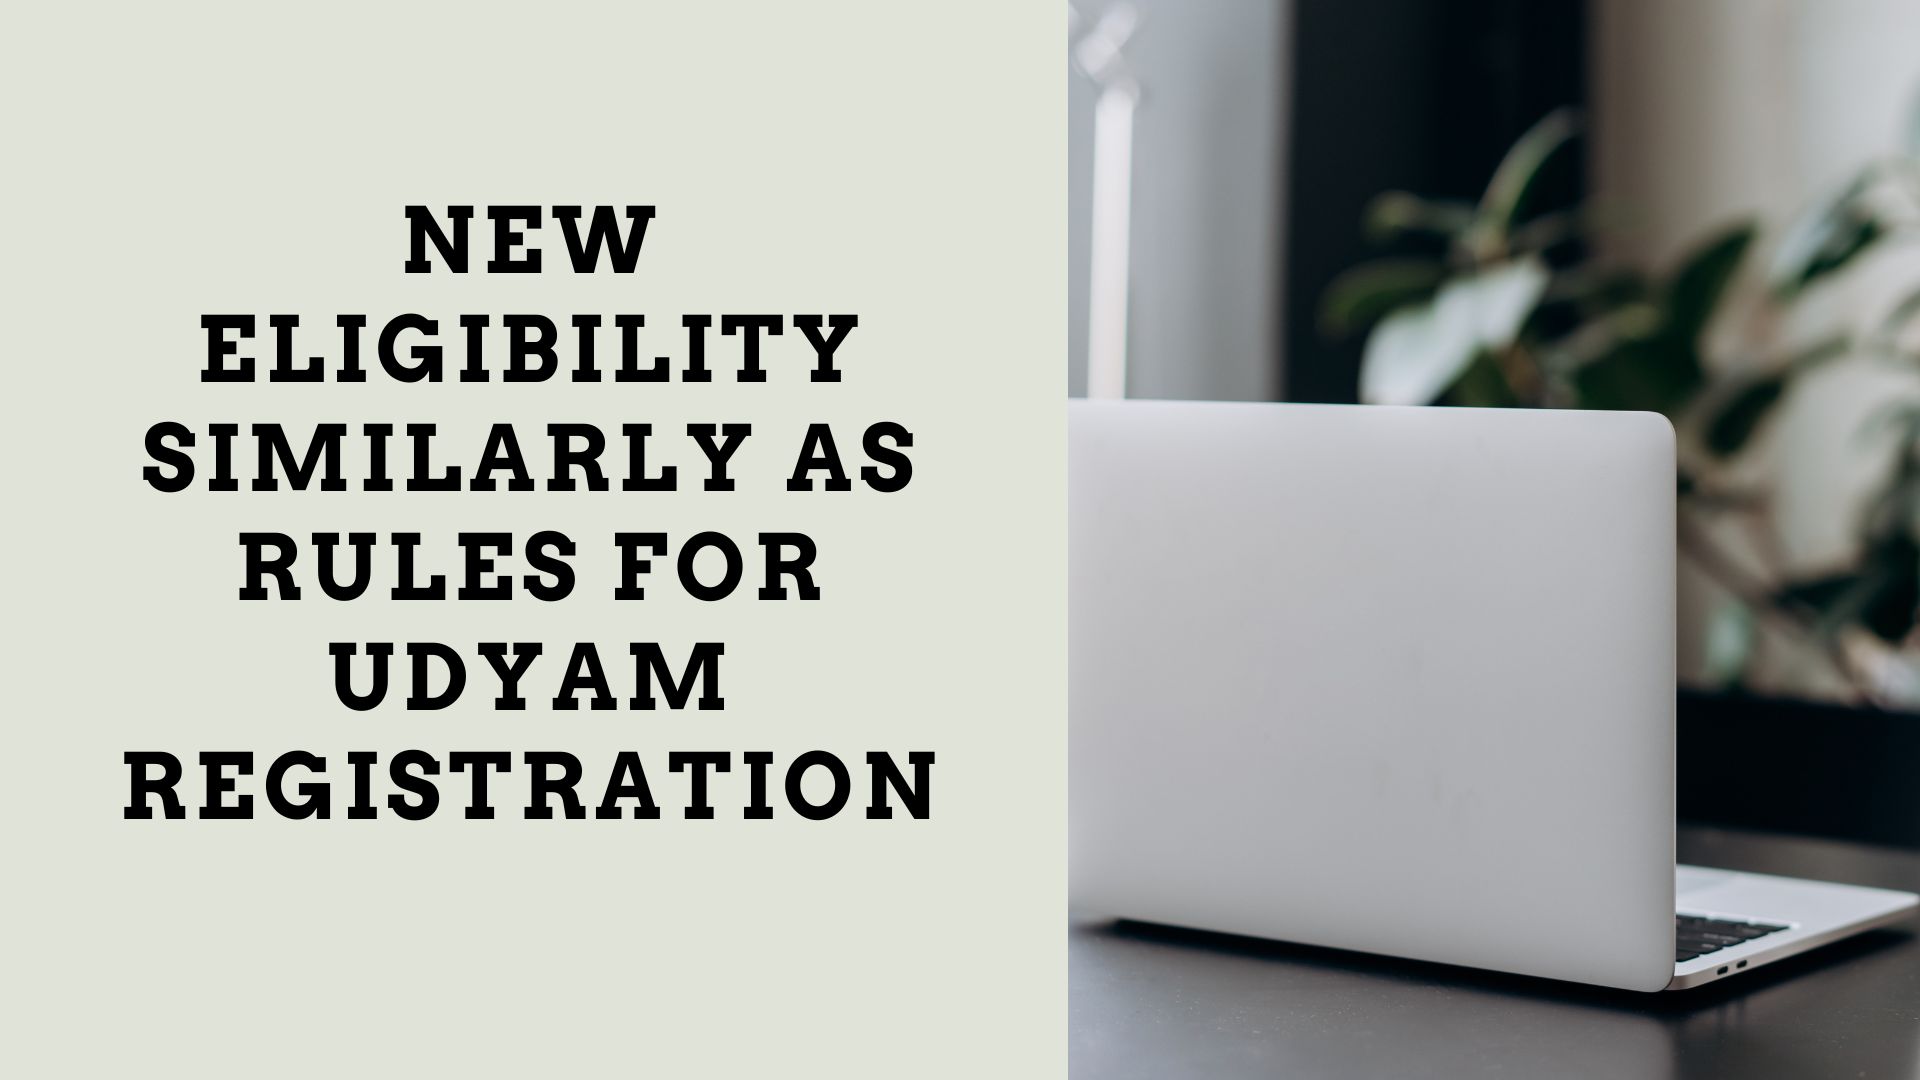 New Eligibility similarly as rules for Udyam Registration